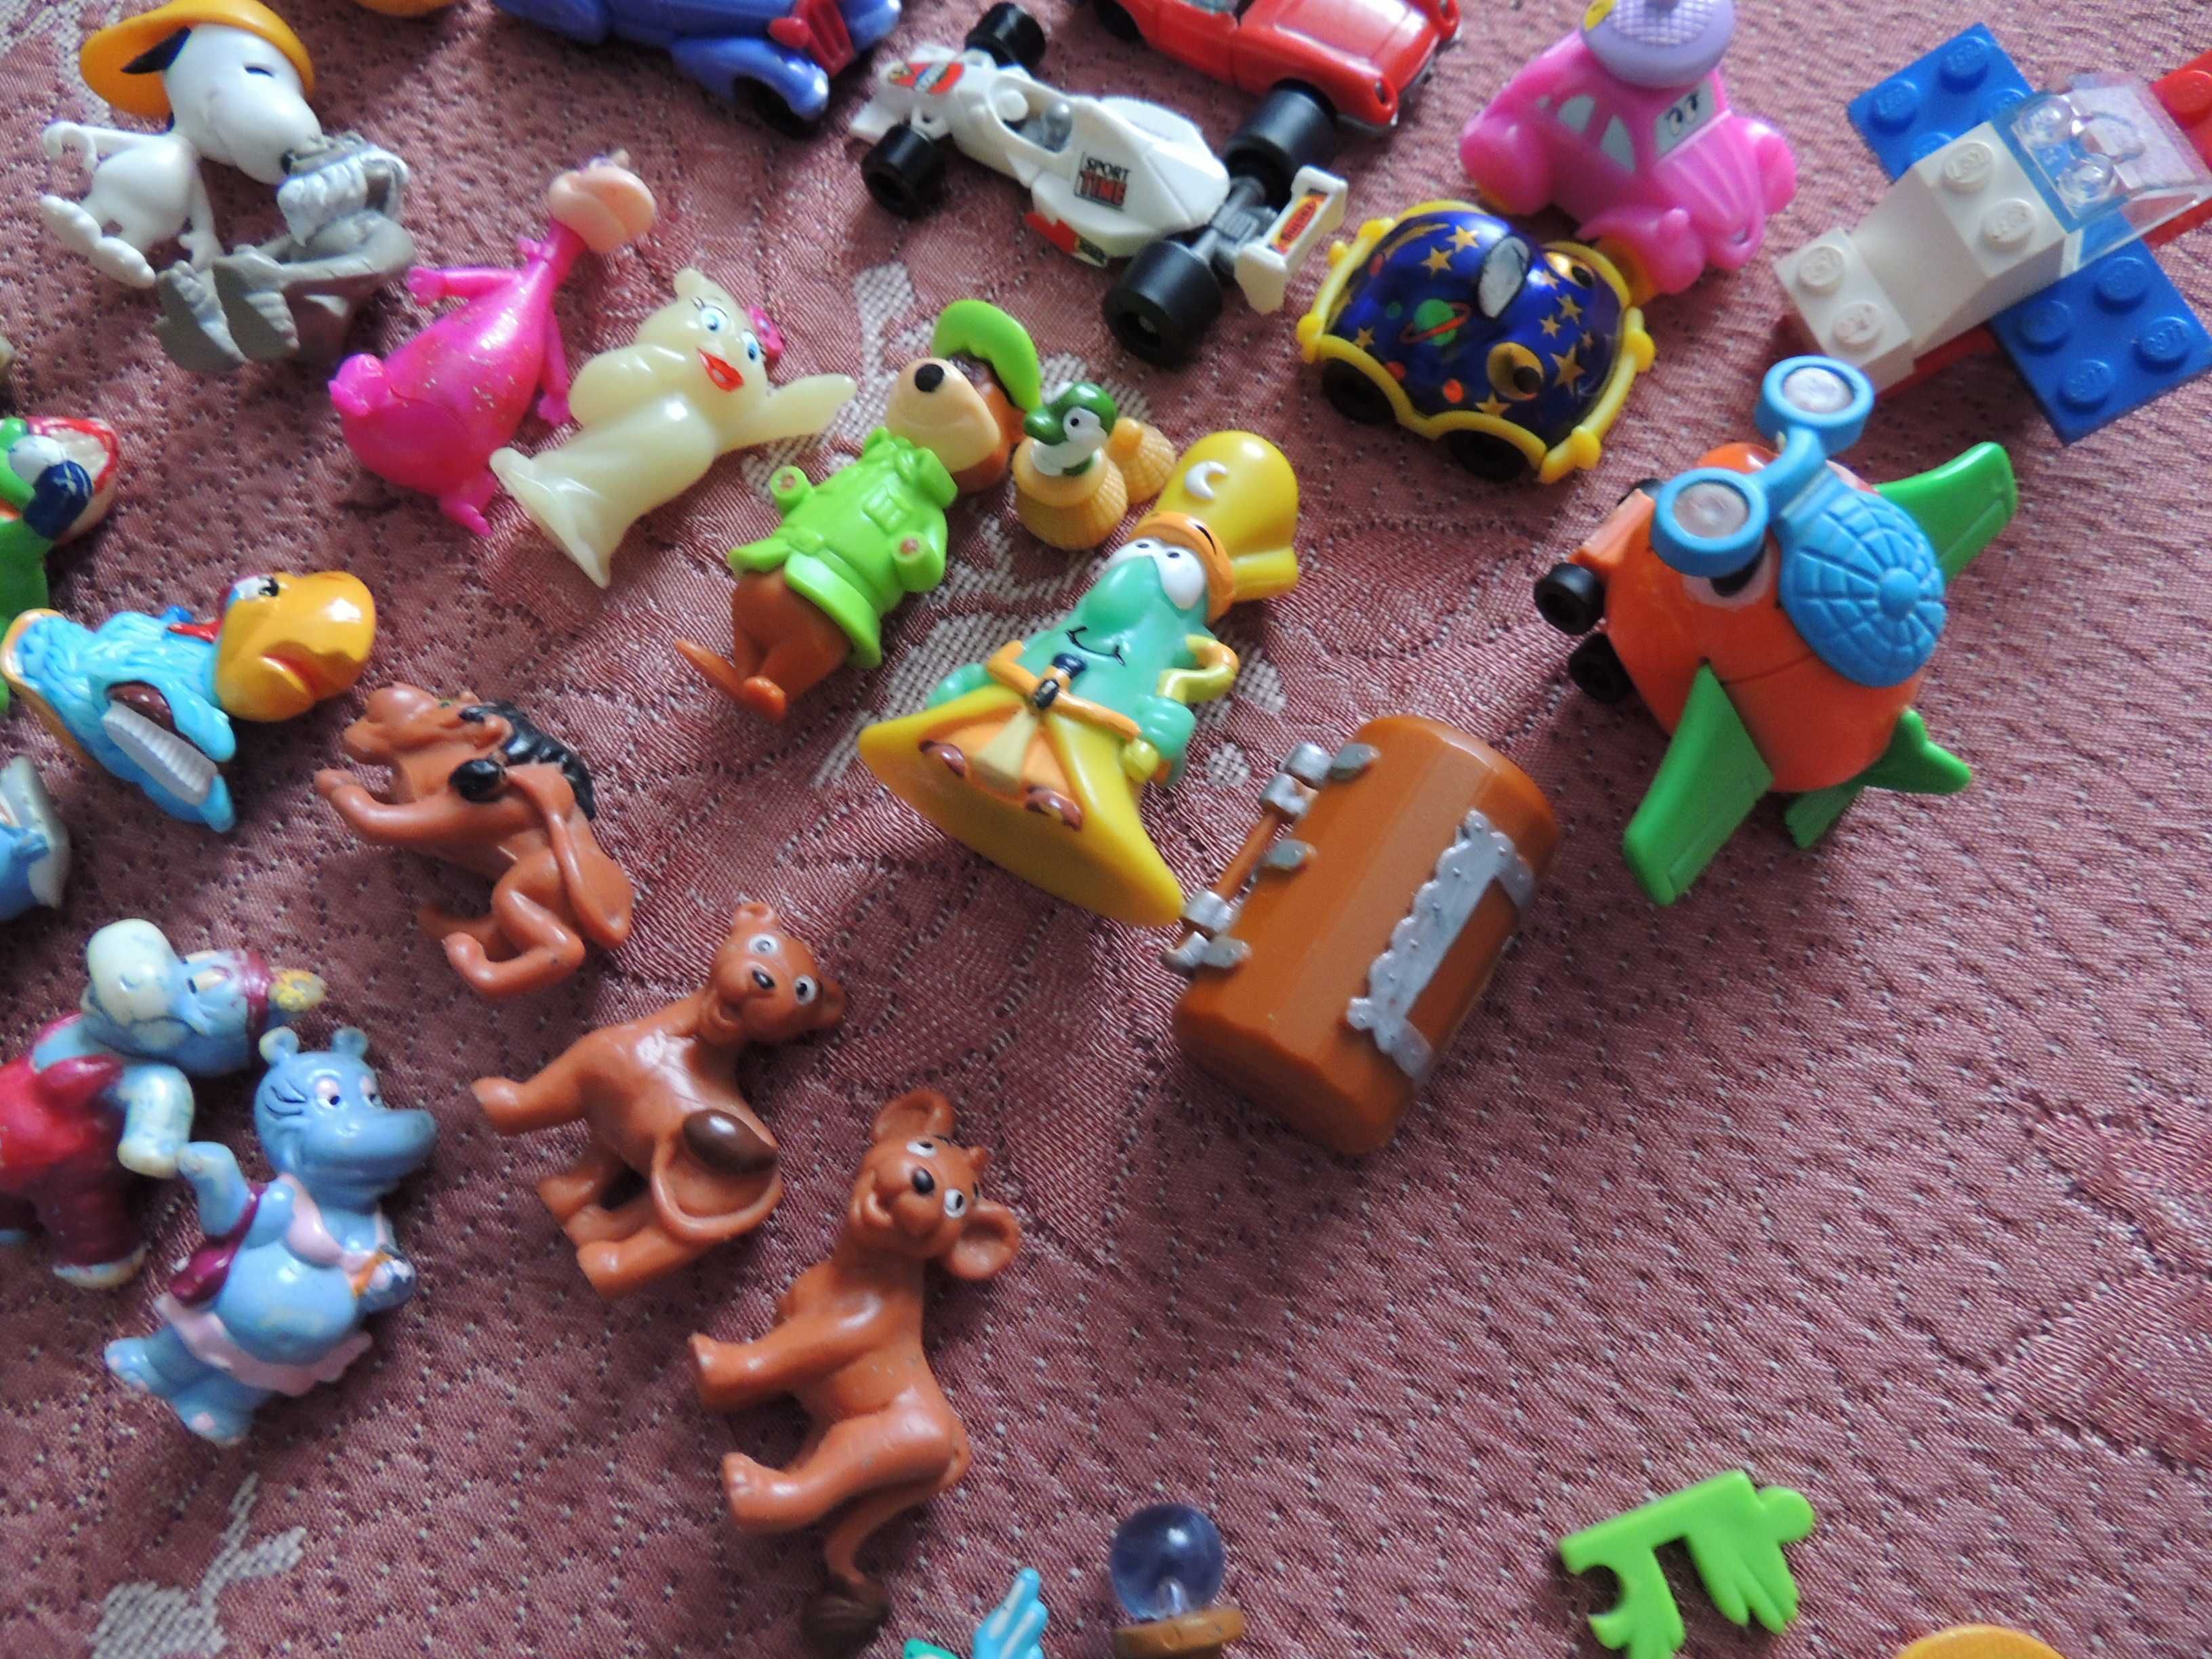 Киндер сюрприз игрушки коллекция Kinder цена за ВЕСЬ набор 250 грн.